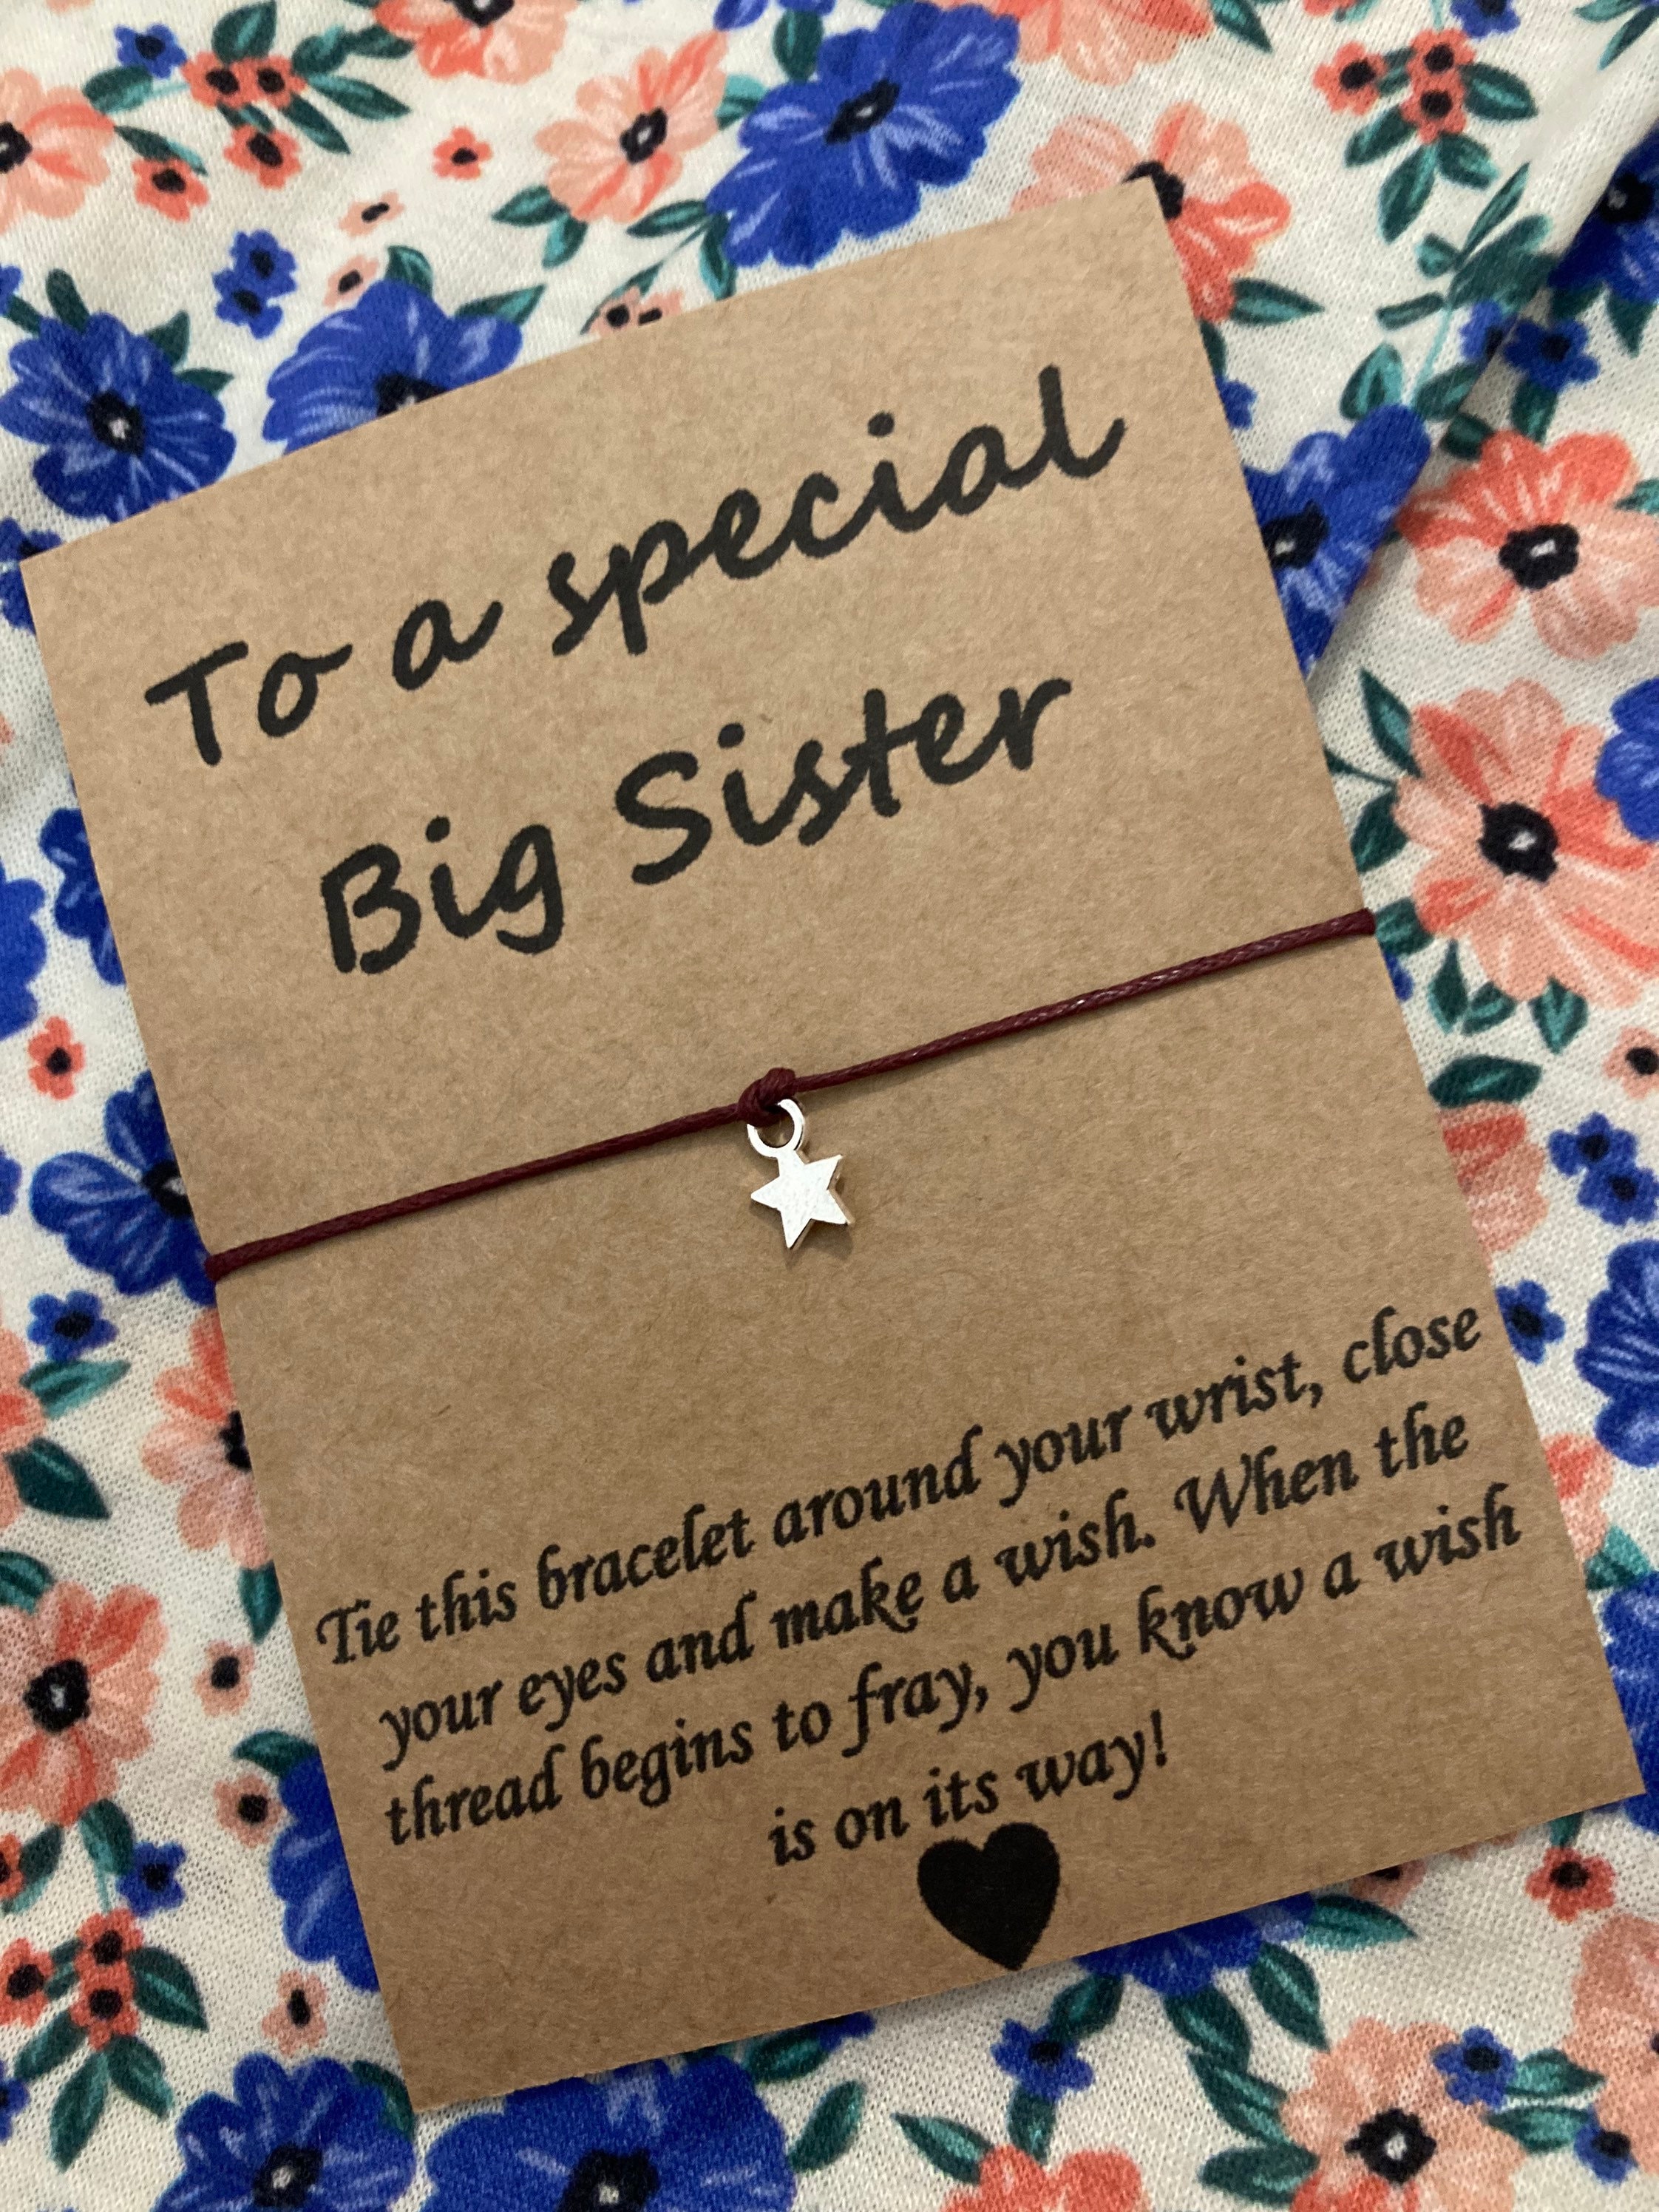 Sister Bracelet / Sister Charm Bracelets / Girls Bracelets / Child Bracelet / Women Bracelet / Birthday Gift Ideas / Handmade Jewelry